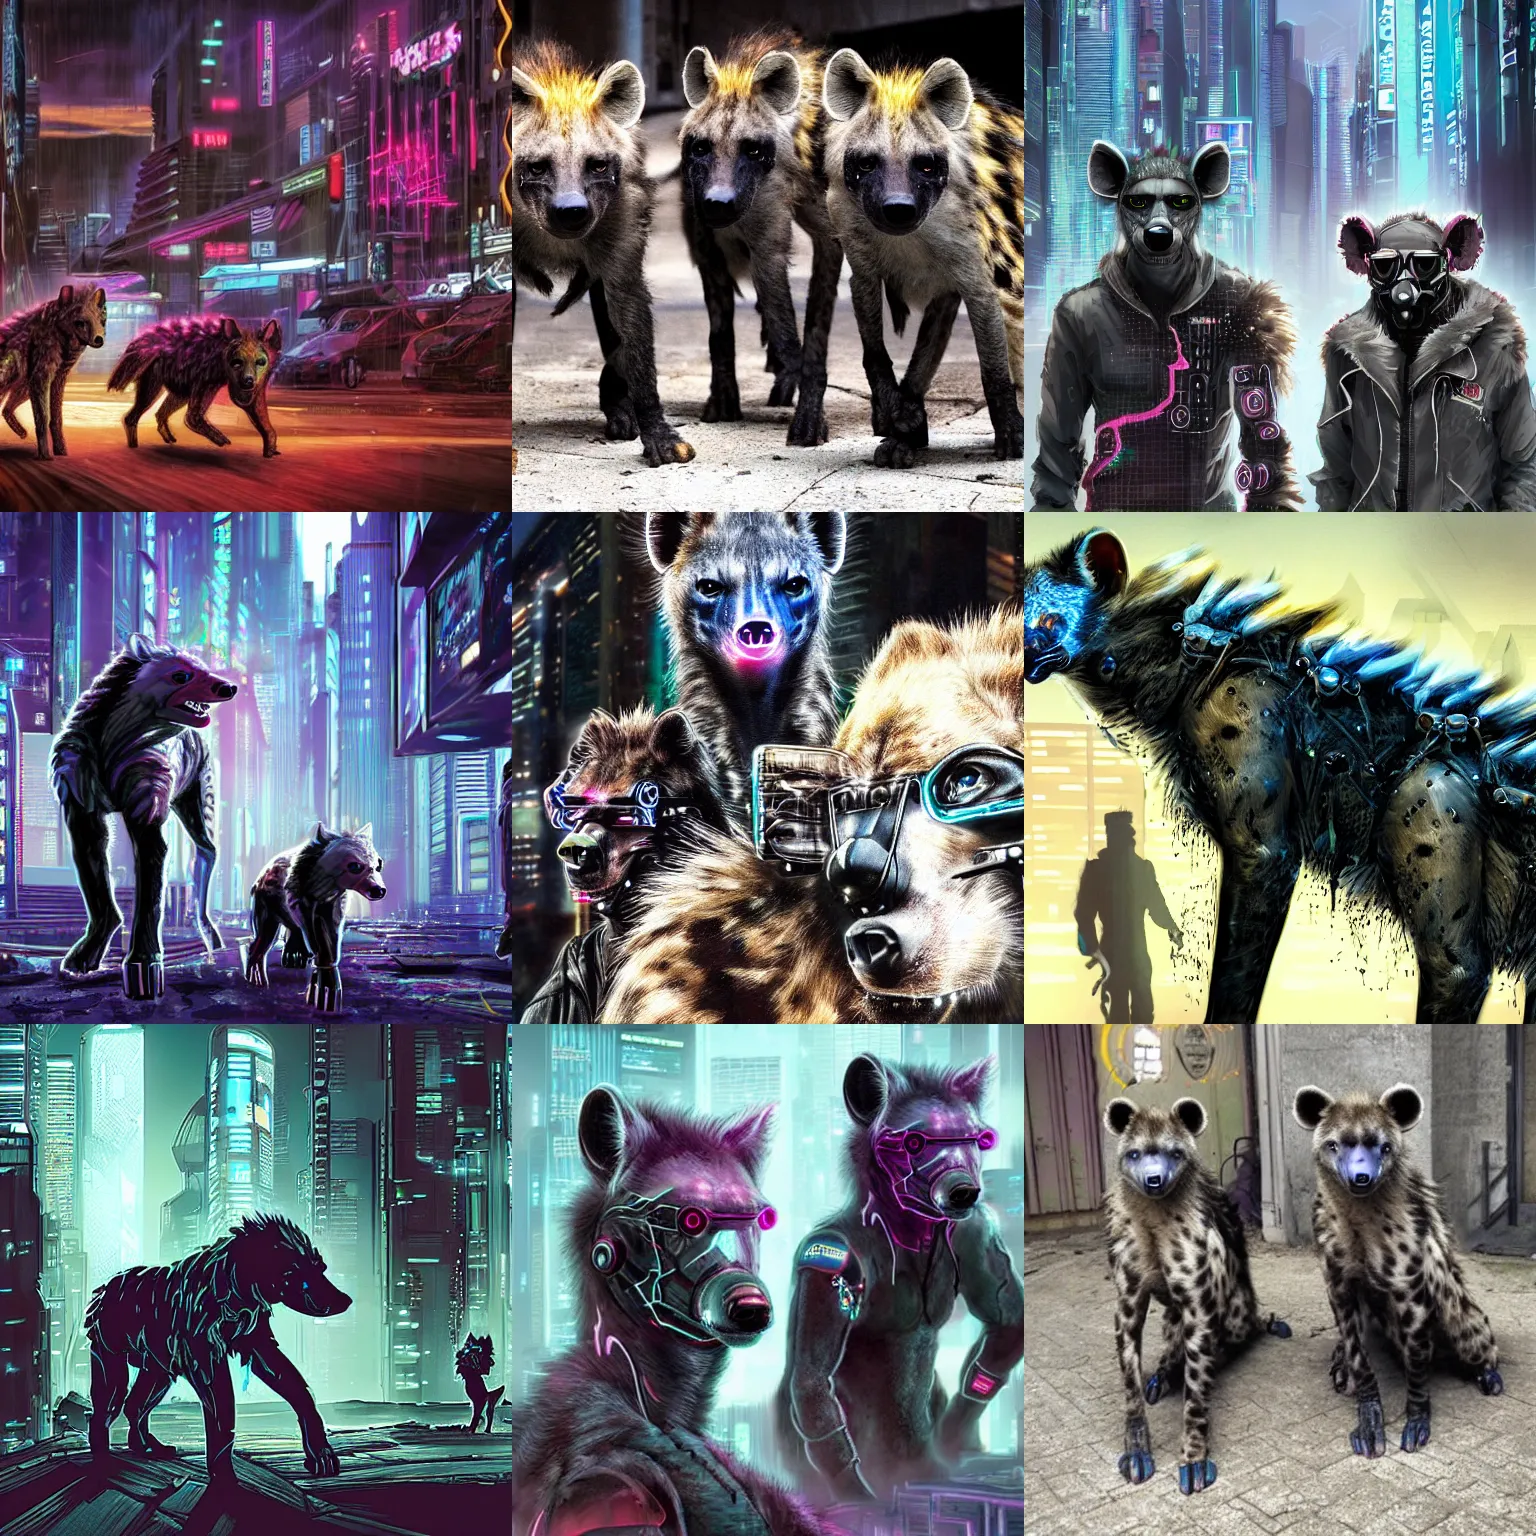 Prompt: Cyberpunk hyenas